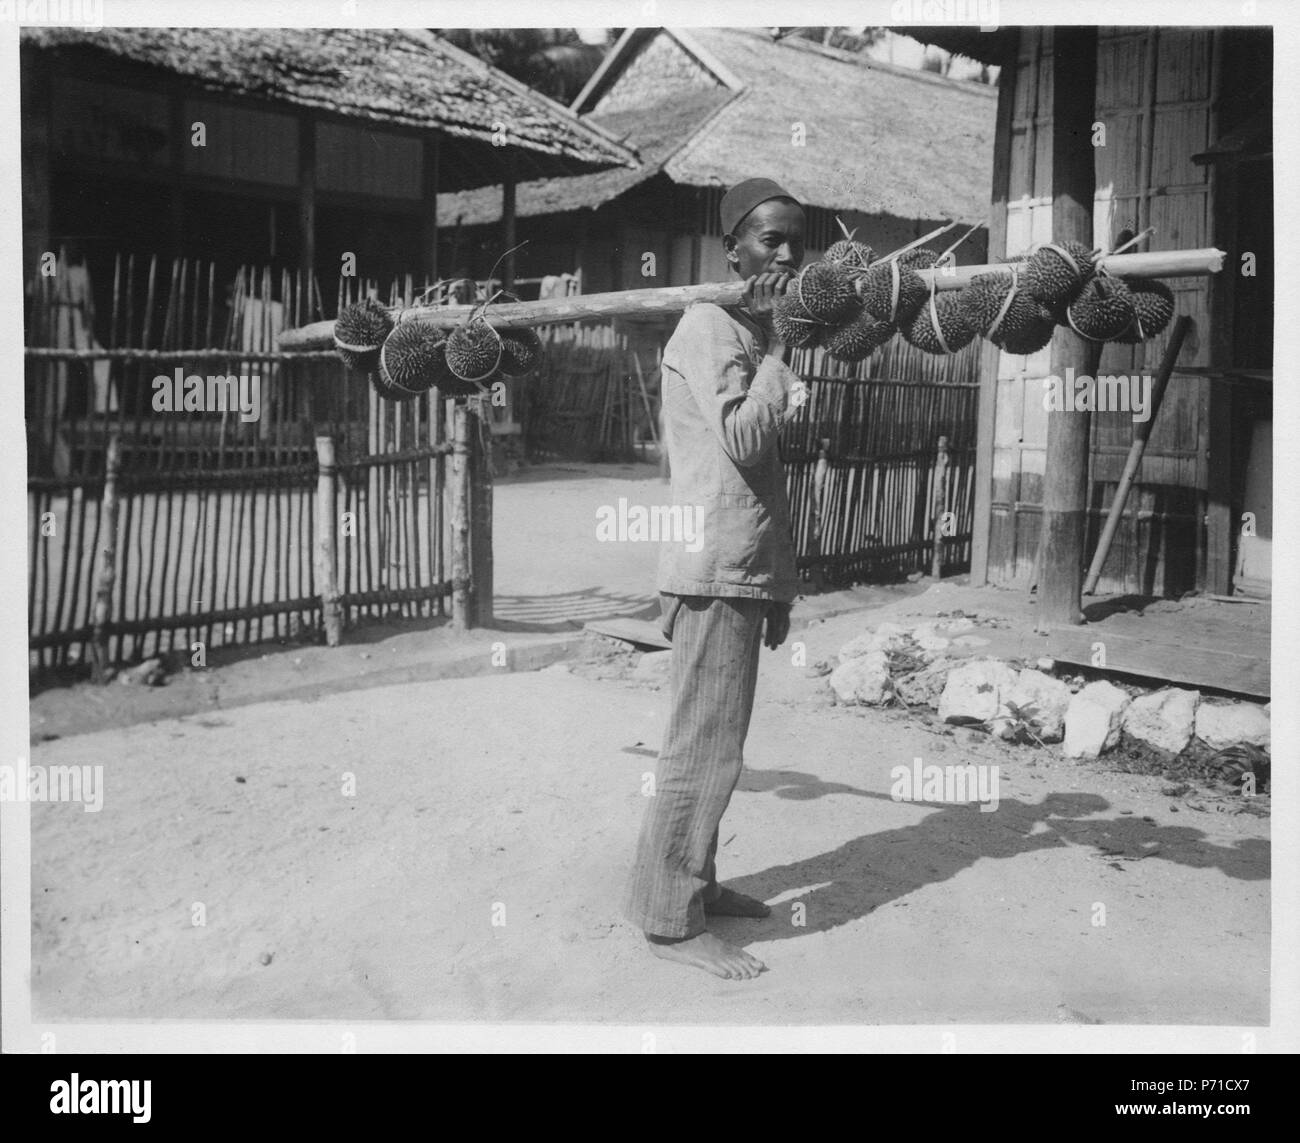 13 Försäljare av doerianfrukter. Banggaai, Poso, Sulawesi. Indonesien - SMVK - 000243 Stock Photo